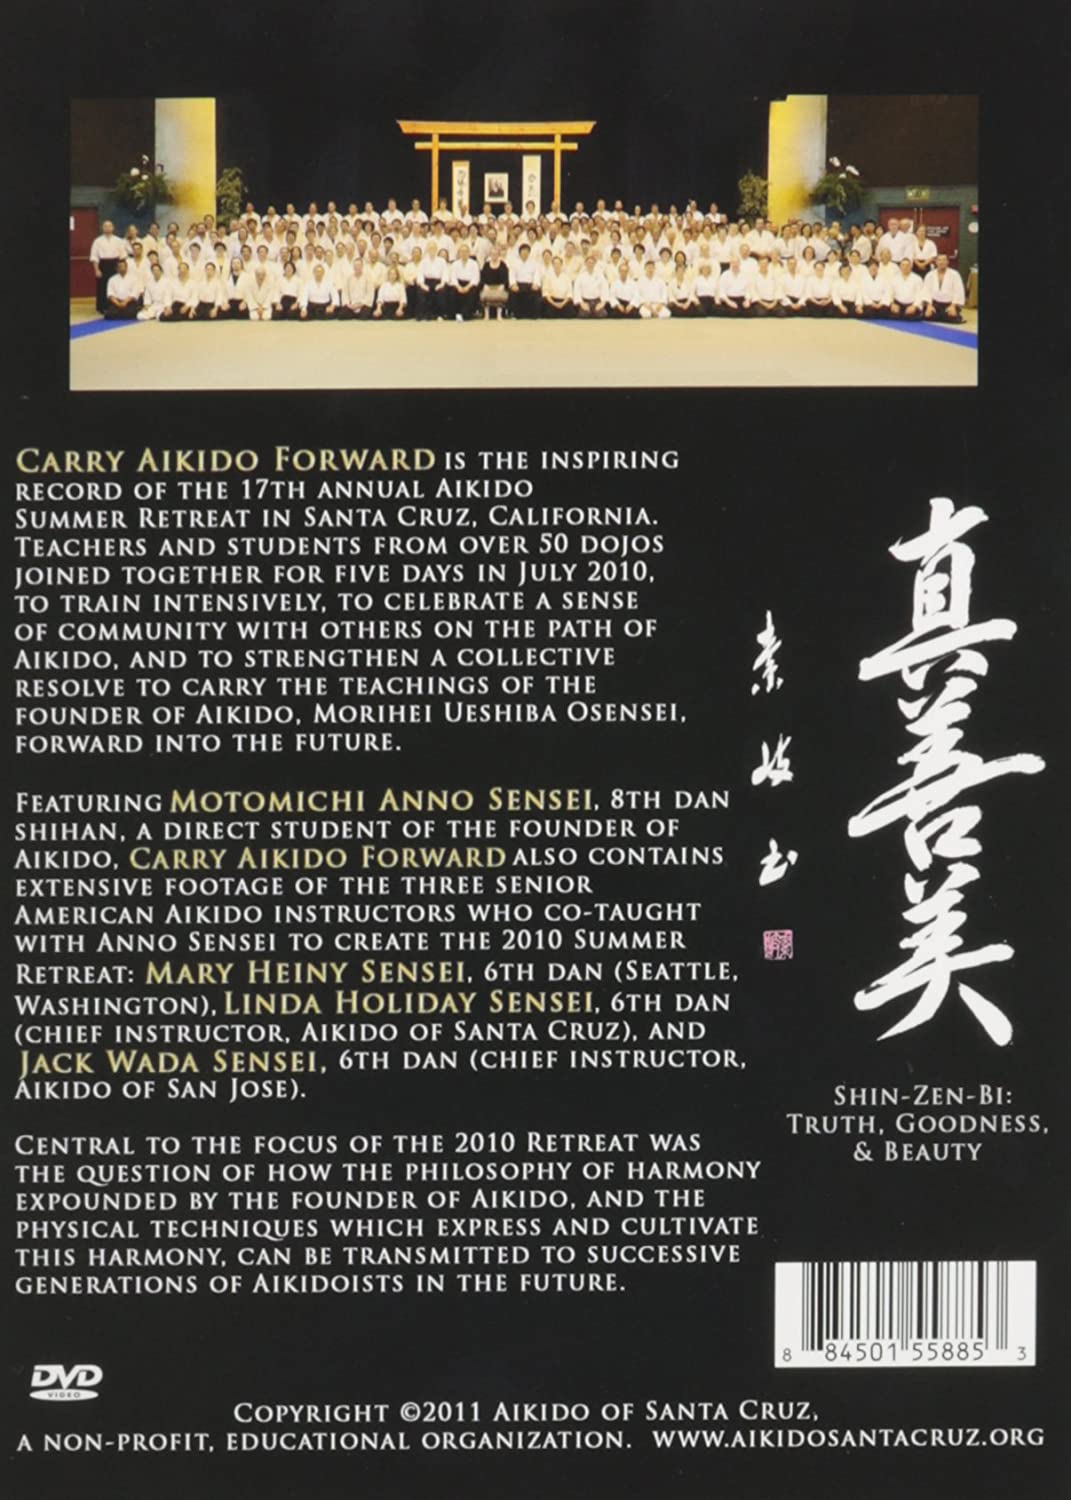 Carry Aikido Forward DVD with Motomichi Anno, Mary Heiny, Jack Wada & Linda Holiday - Budovideos